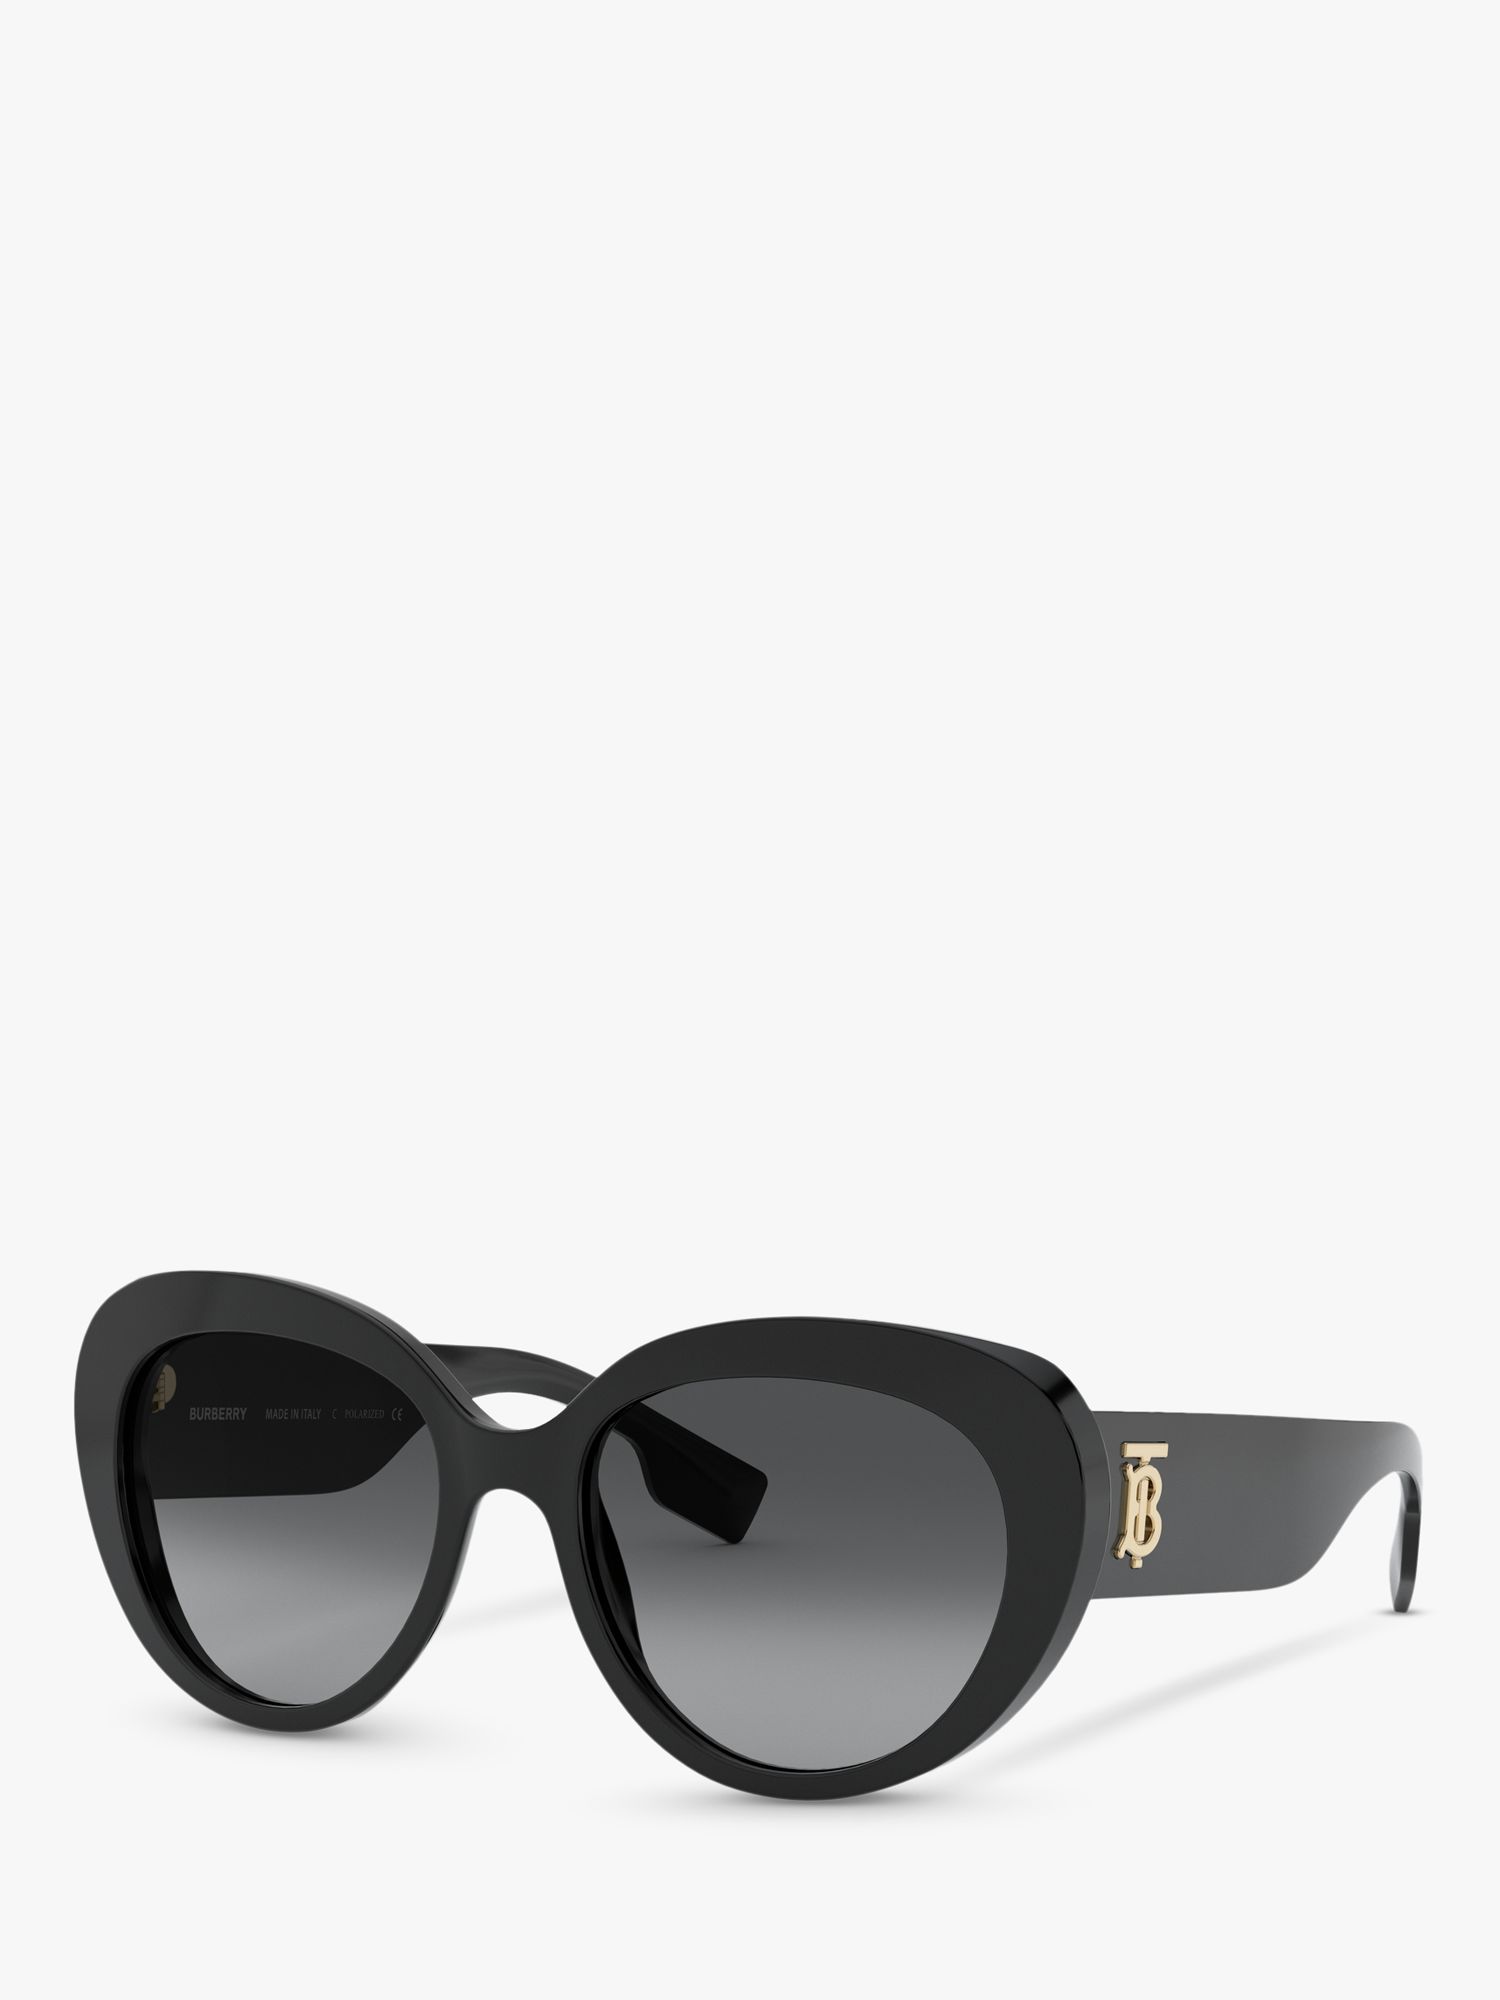 burberry polarised sunglasses